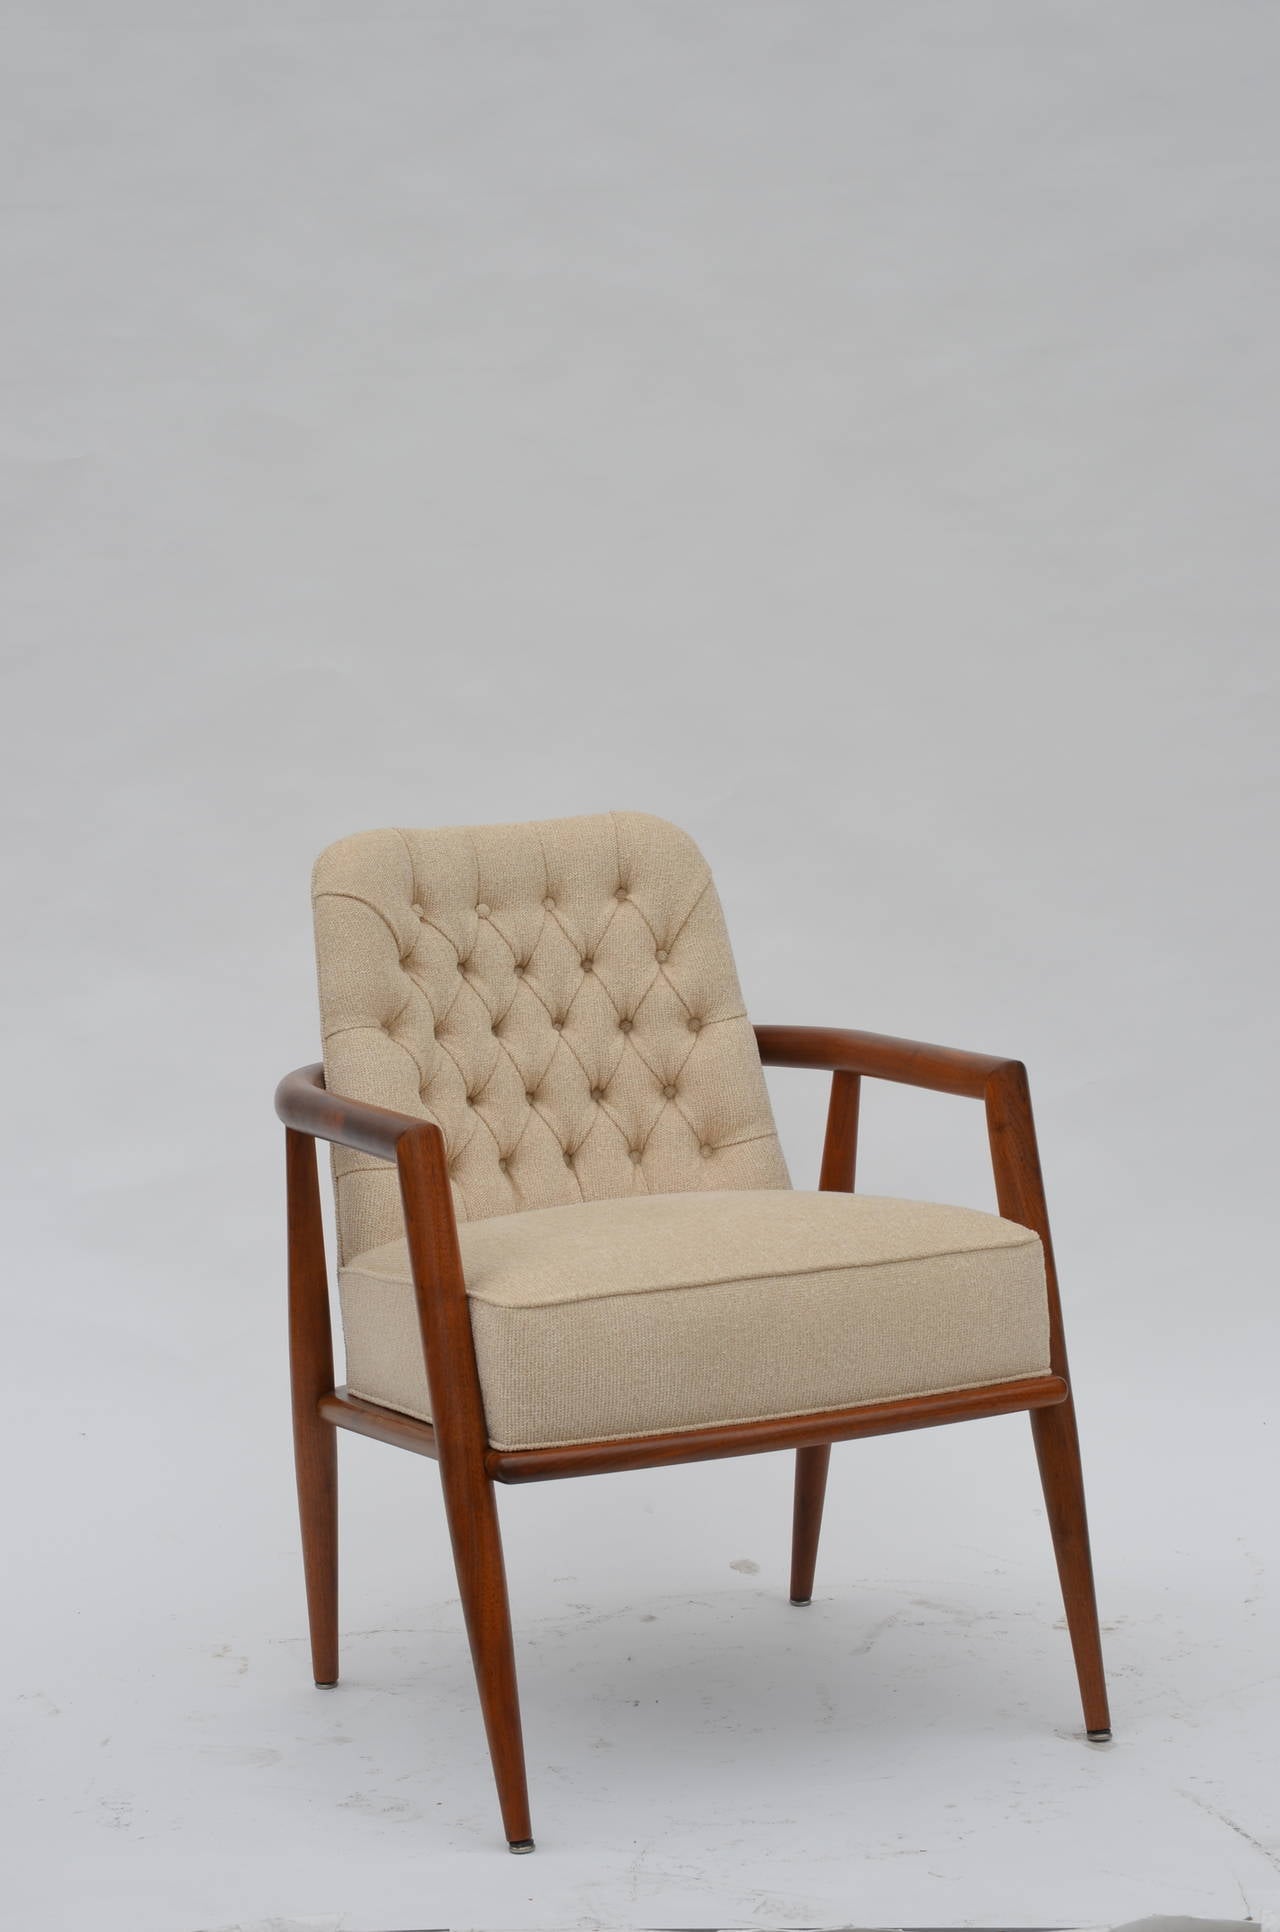 Elegant Tufted Back Armchair by Leslie Diamond for Conant Ball. Cream linen upholstery. 25 in. arm height.